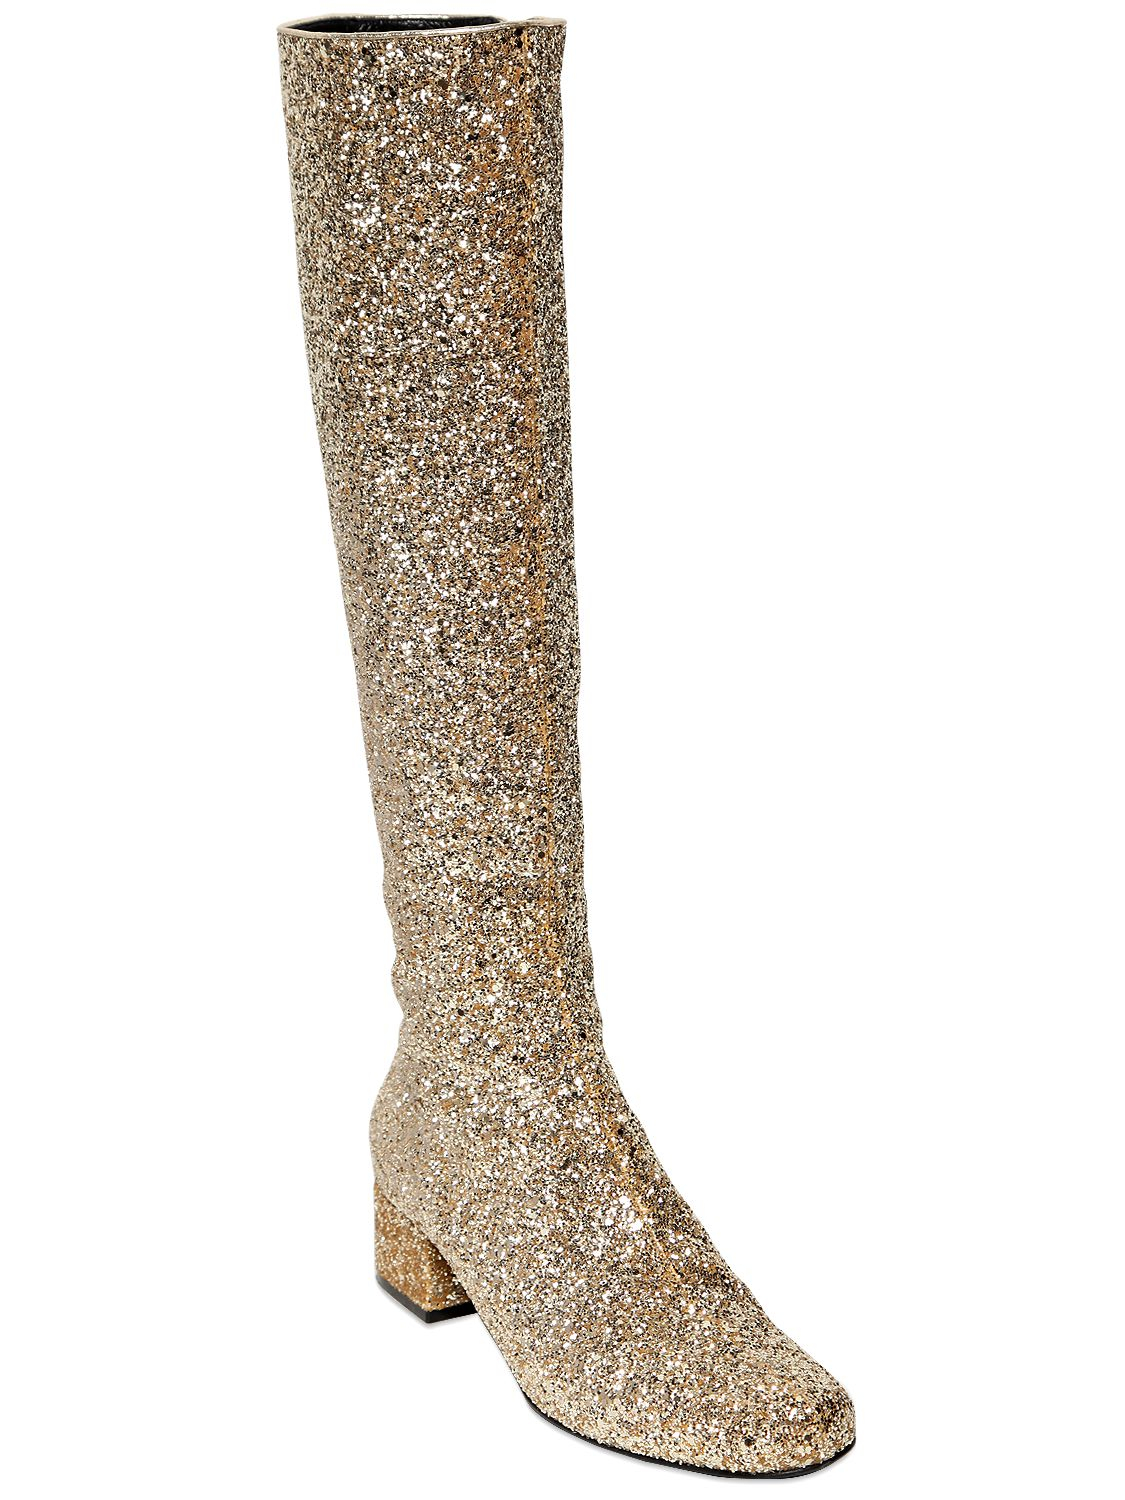 Lyst - Saint Laurent Babies Knee-High Glitter Boots in Metallic